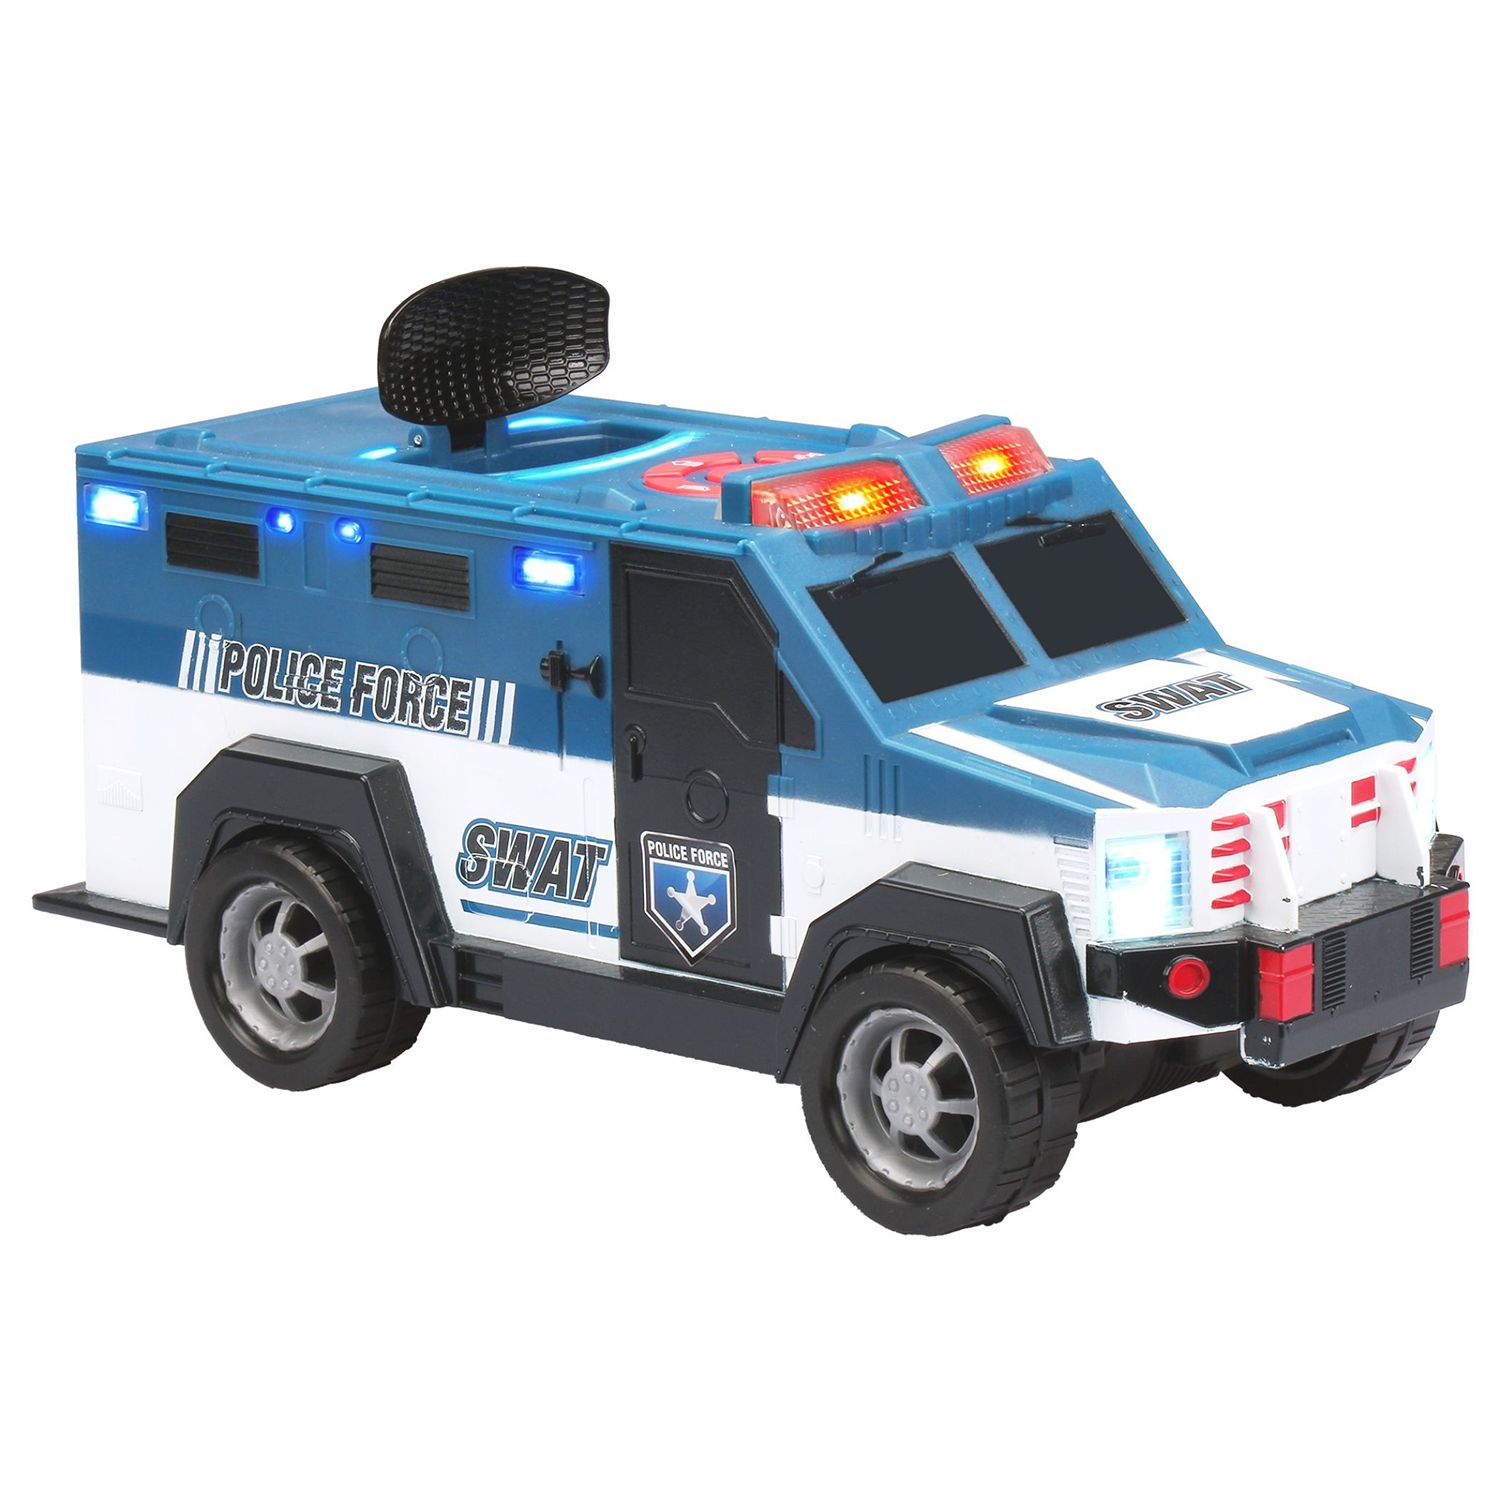 police van toy